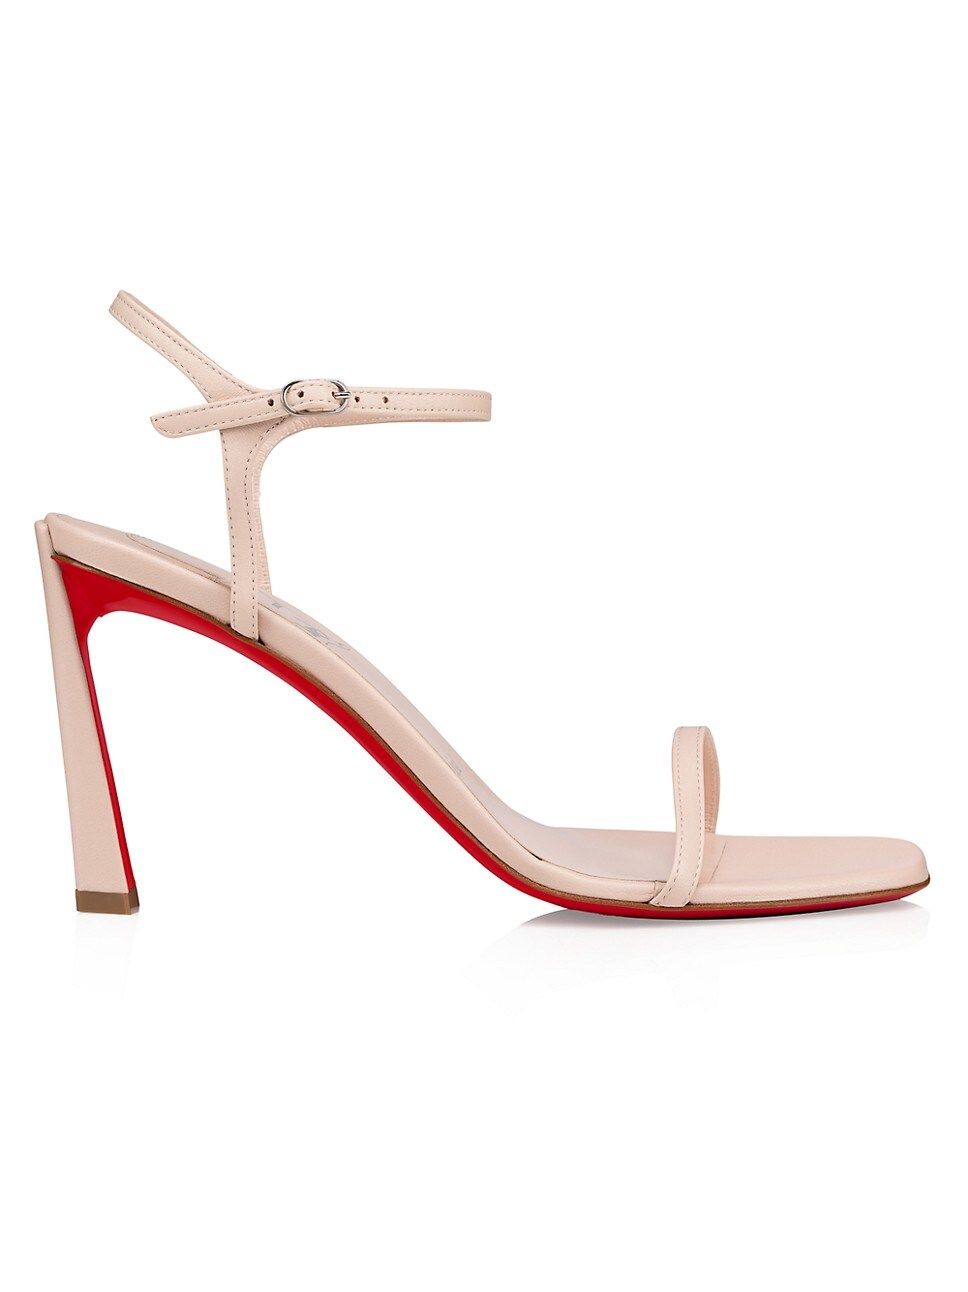 Condora Leather High-Heel Sandals | Saks Fifth Avenue